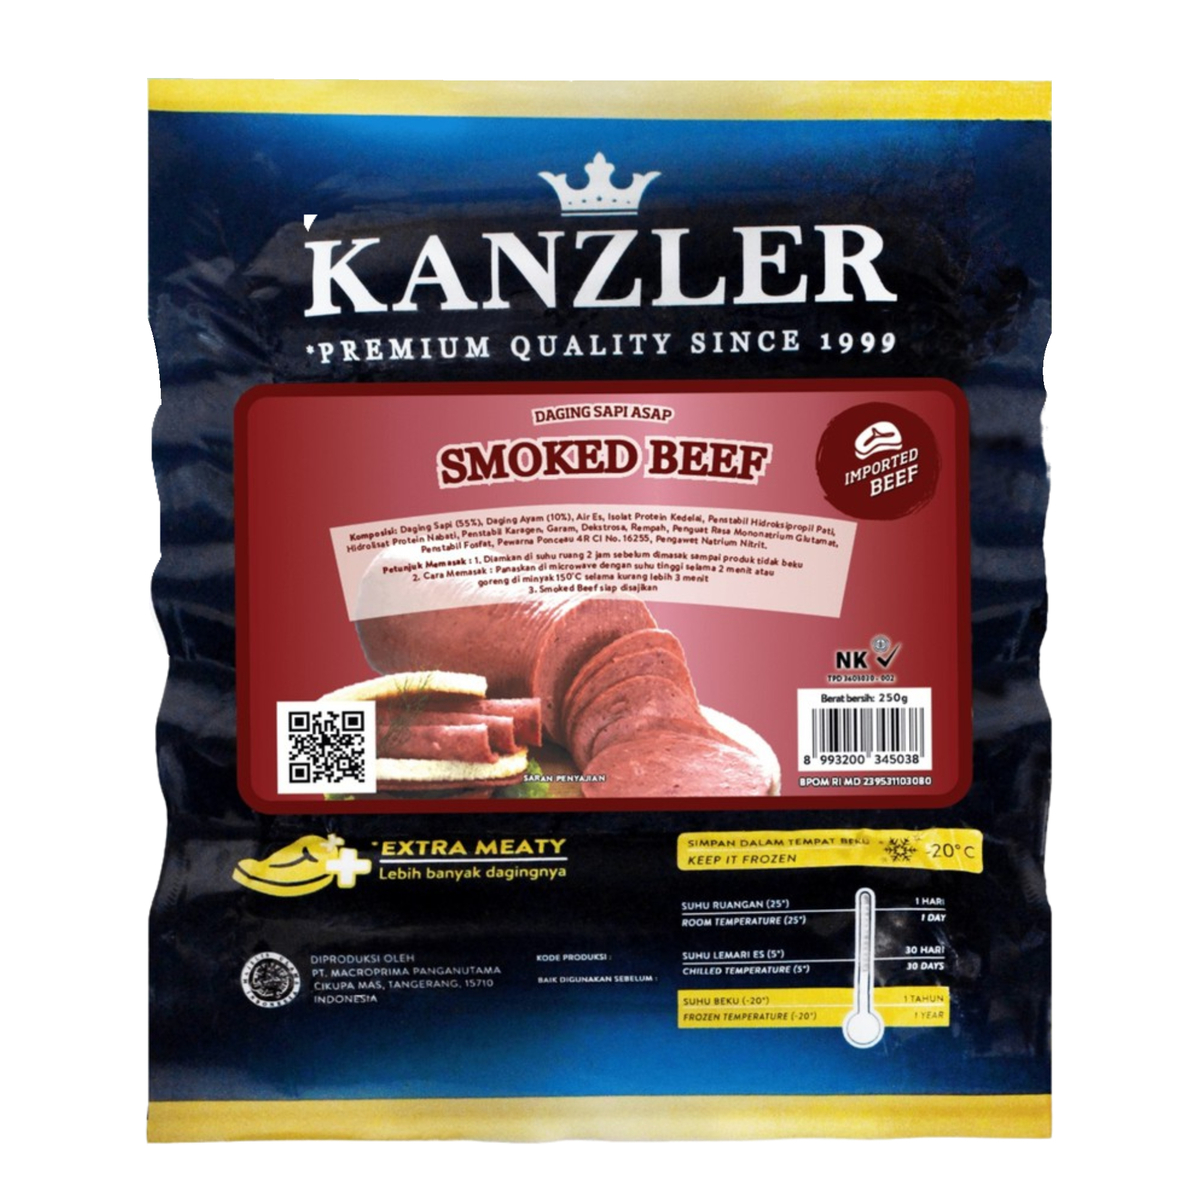 Kanzler Smoked Beef 250g